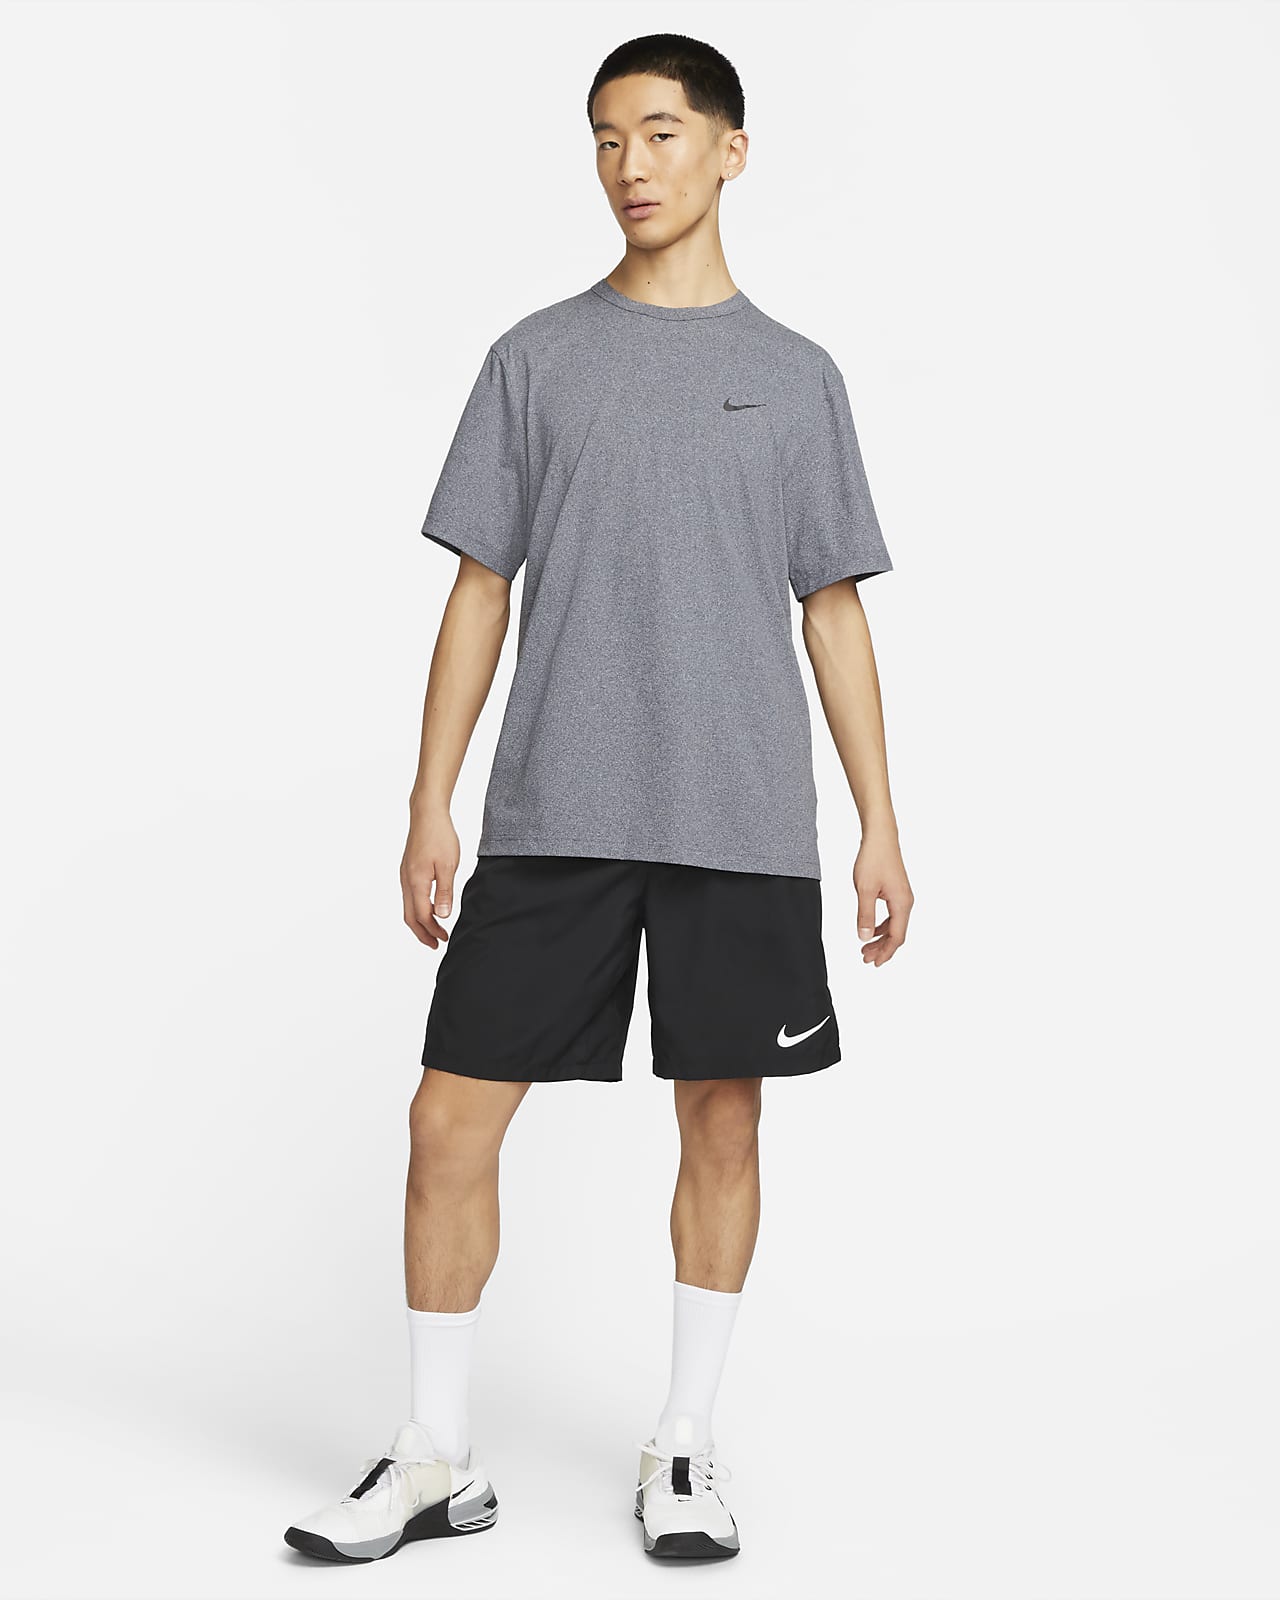 UV Men's Short-Sleeve Fitness Top. Nike ID